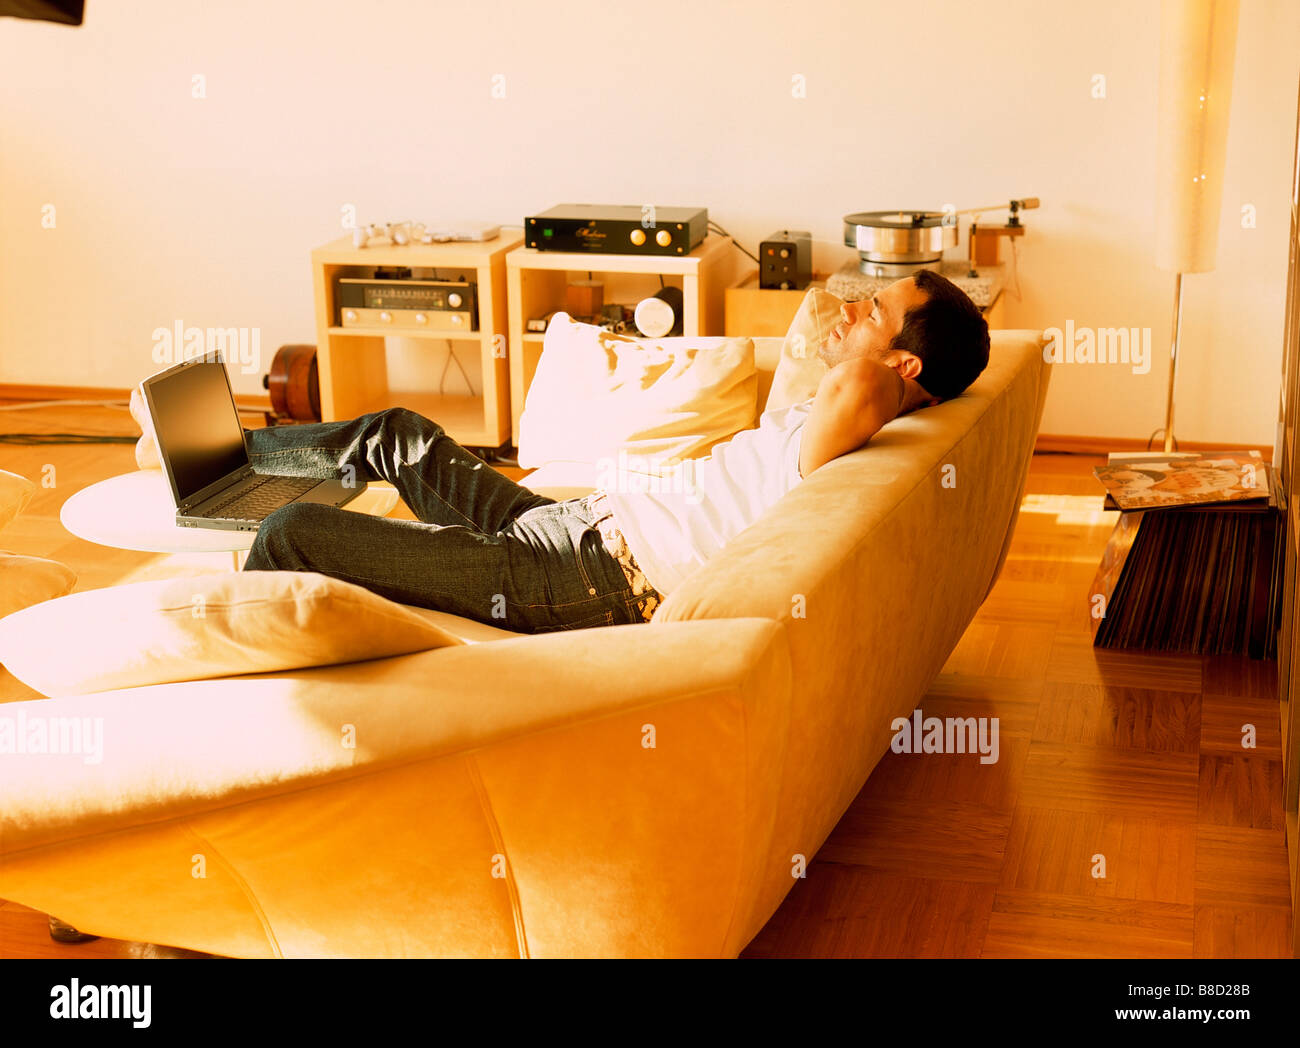 FV3064, Malek Chamoun; Young Man Feet up, Relaxed Stock Photo